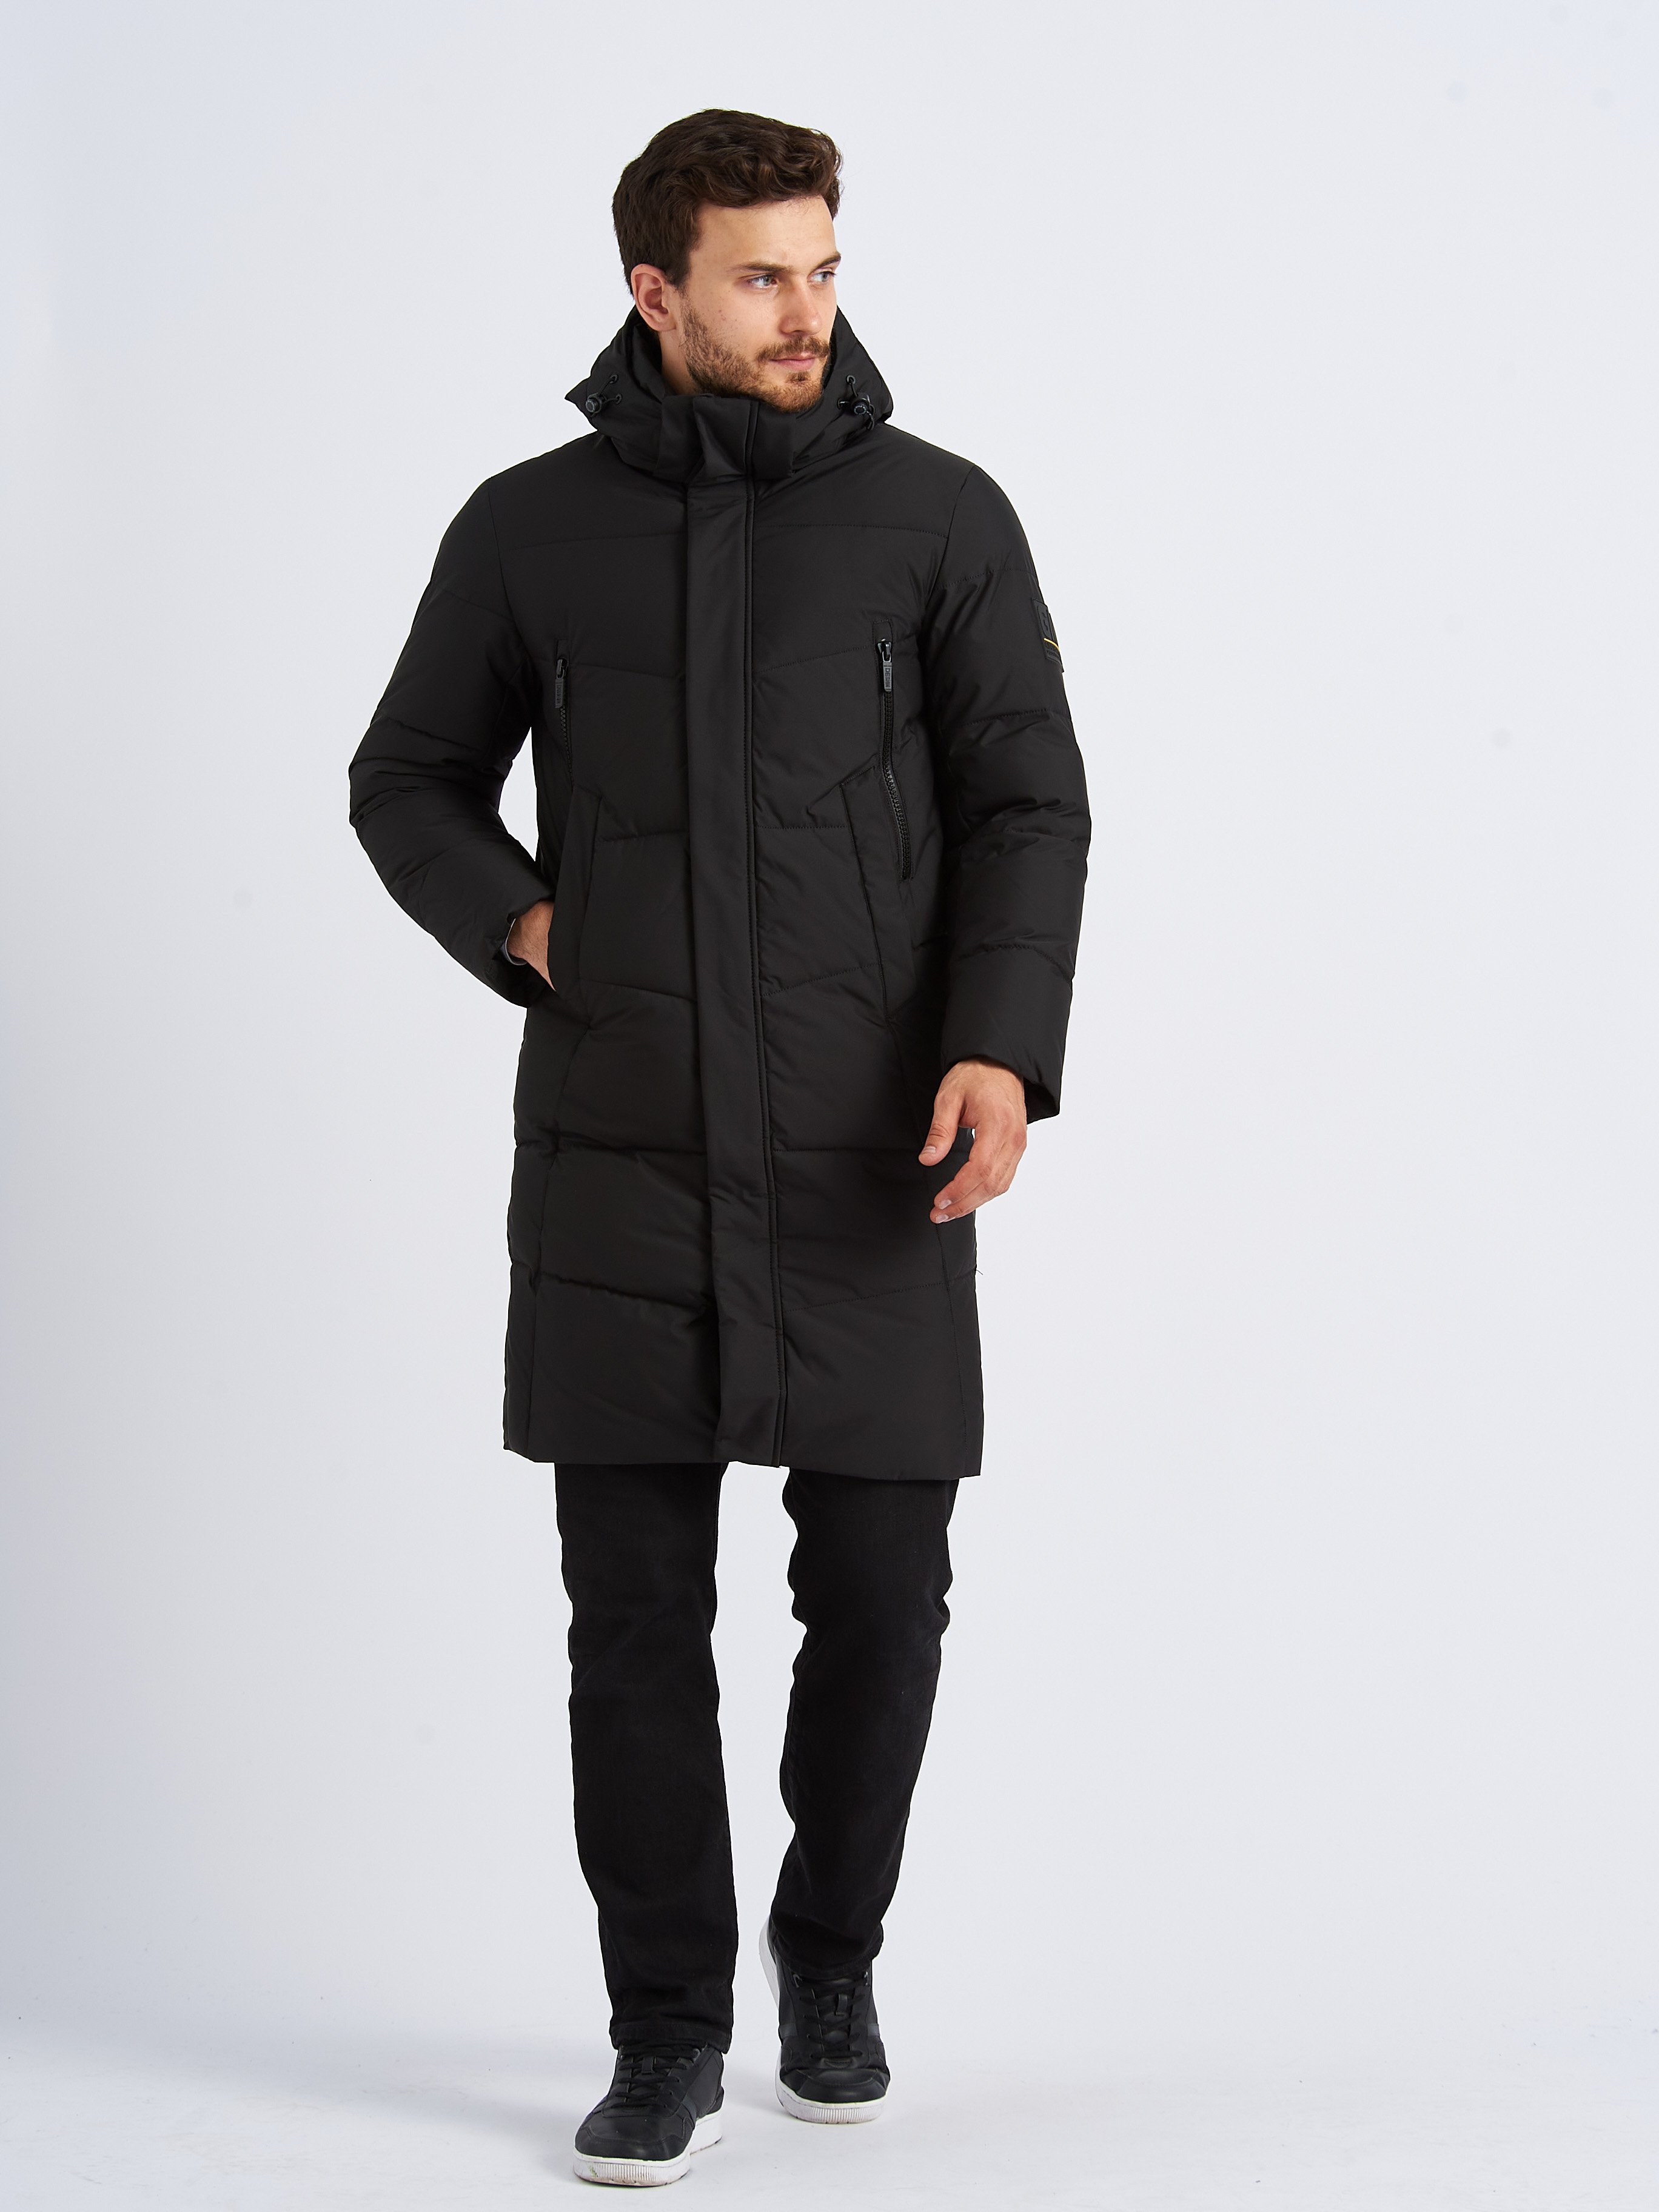 Пальто Grizman для мужчин, чёрное, размер 52, 71715